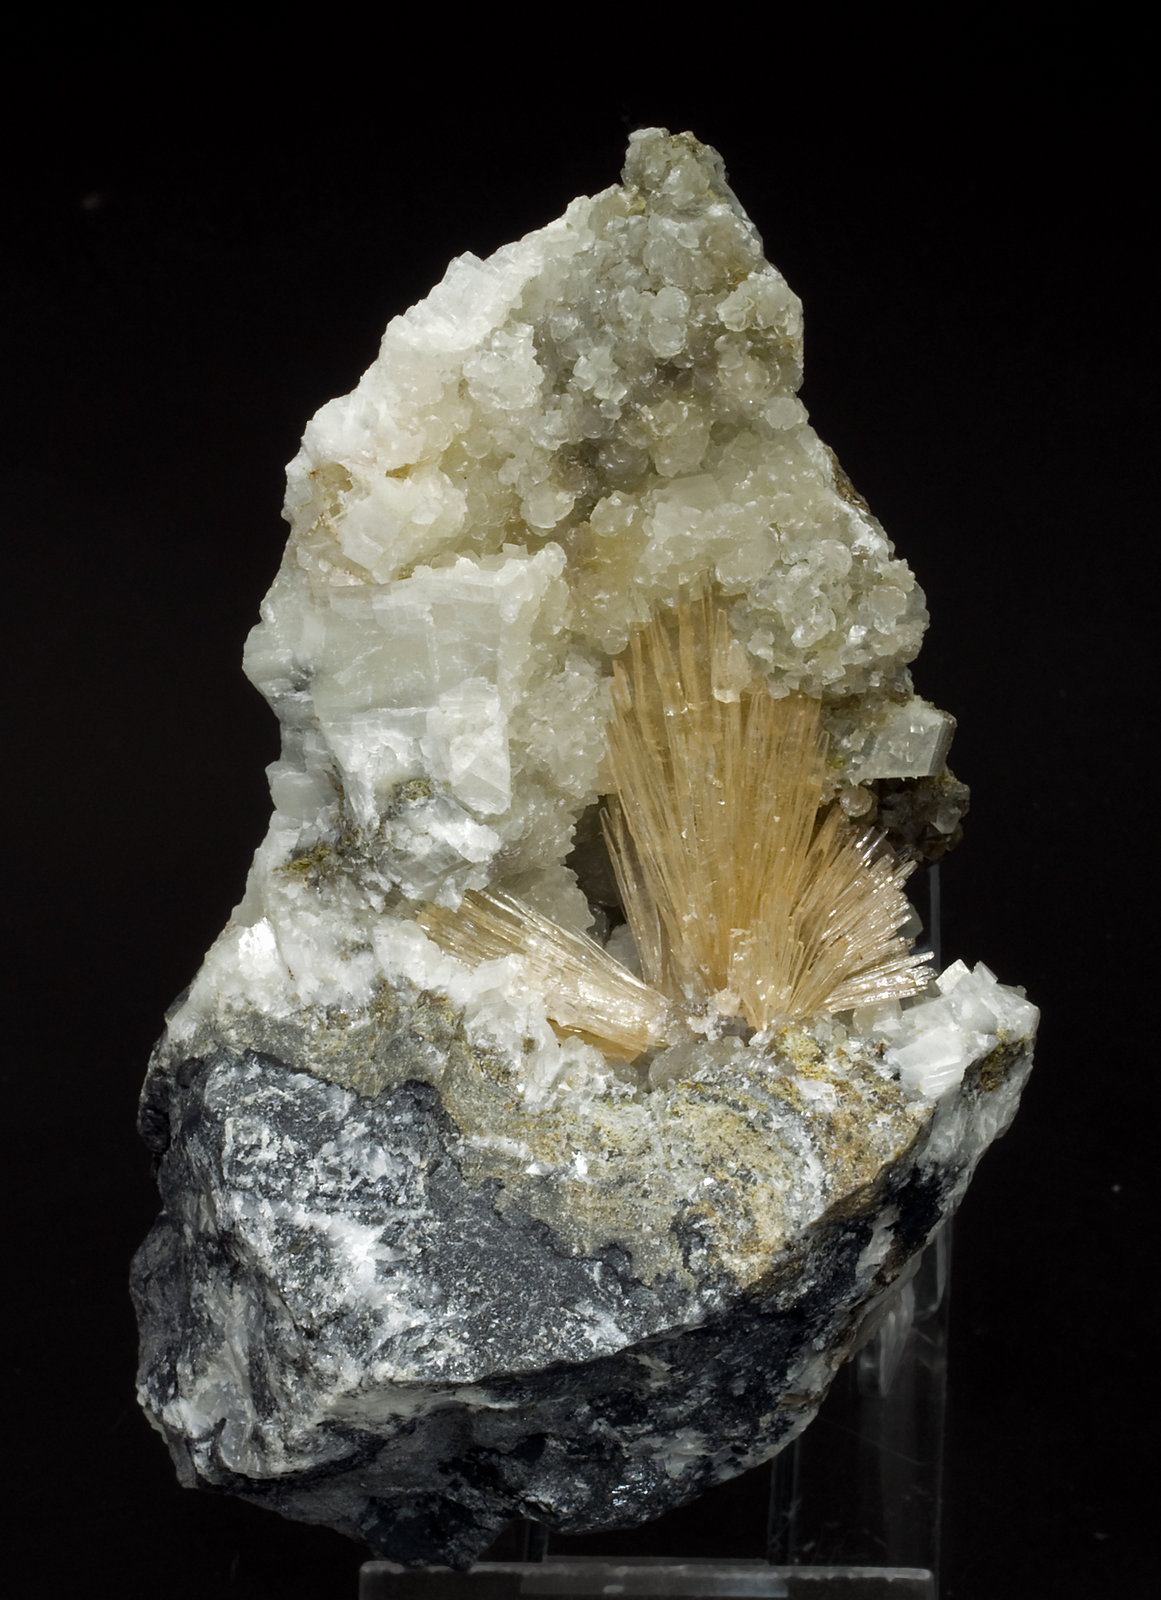 specimens/s_imagesV5/Aragonite-NE76V5f.jpg